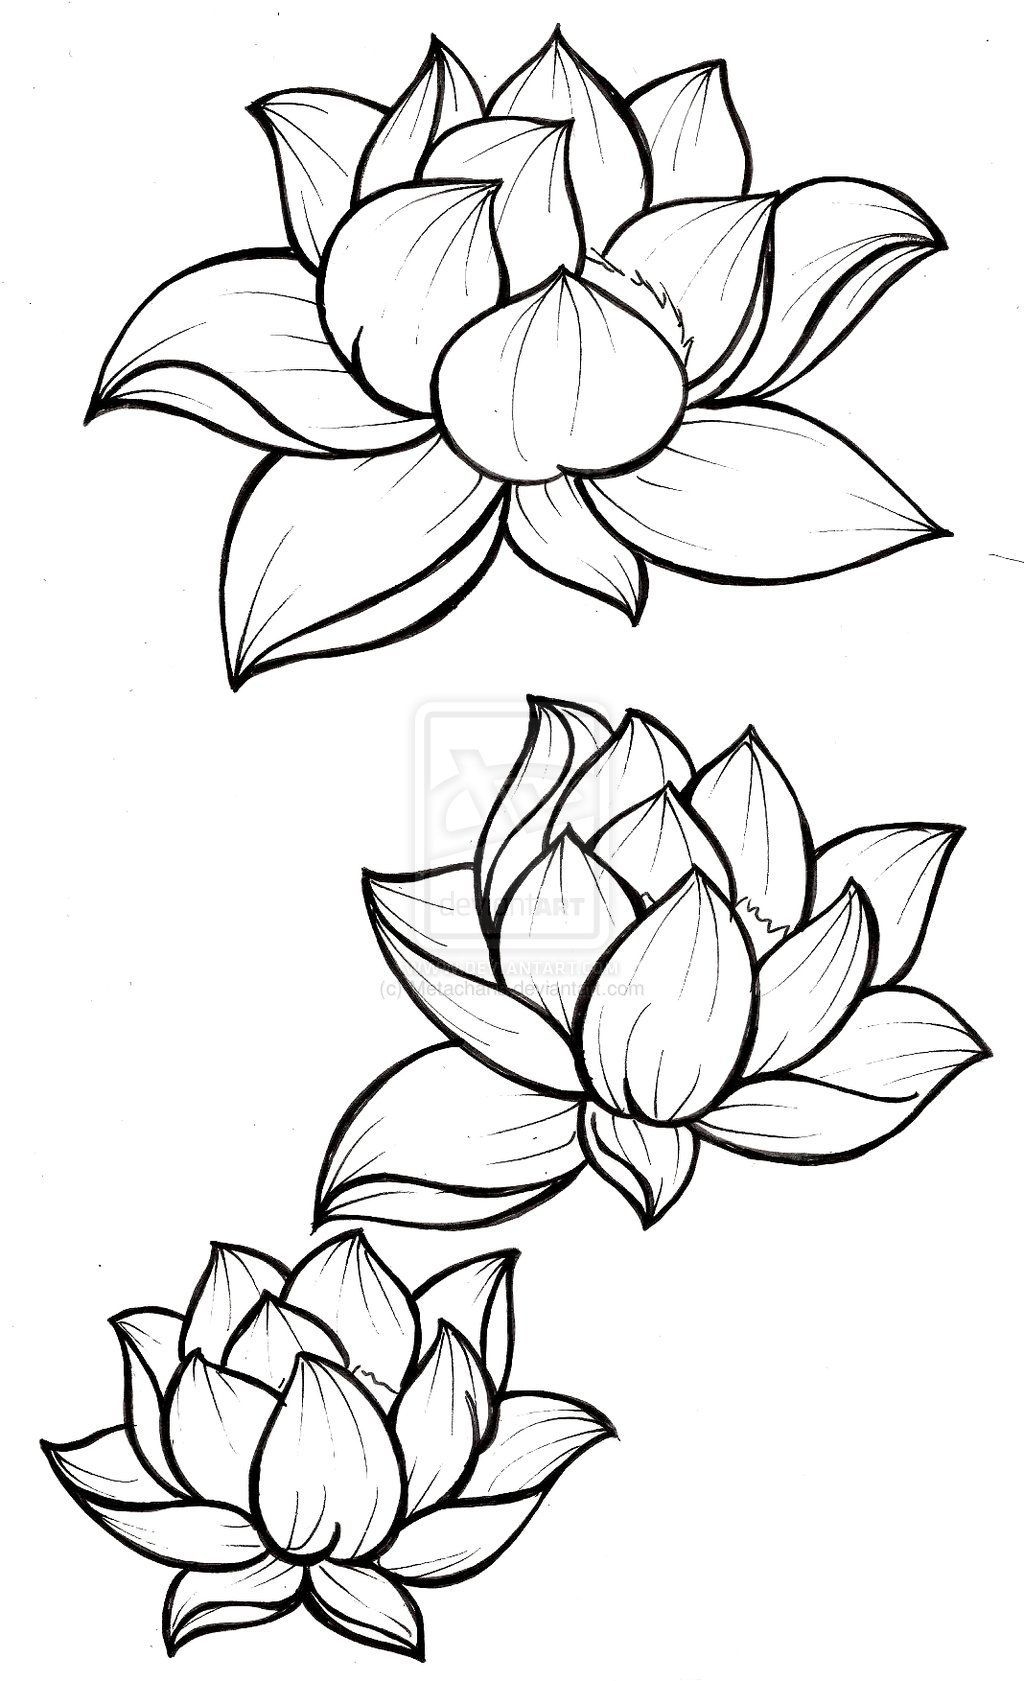 Lotus Blossom Tattoo by ~Metacharis on deviantART